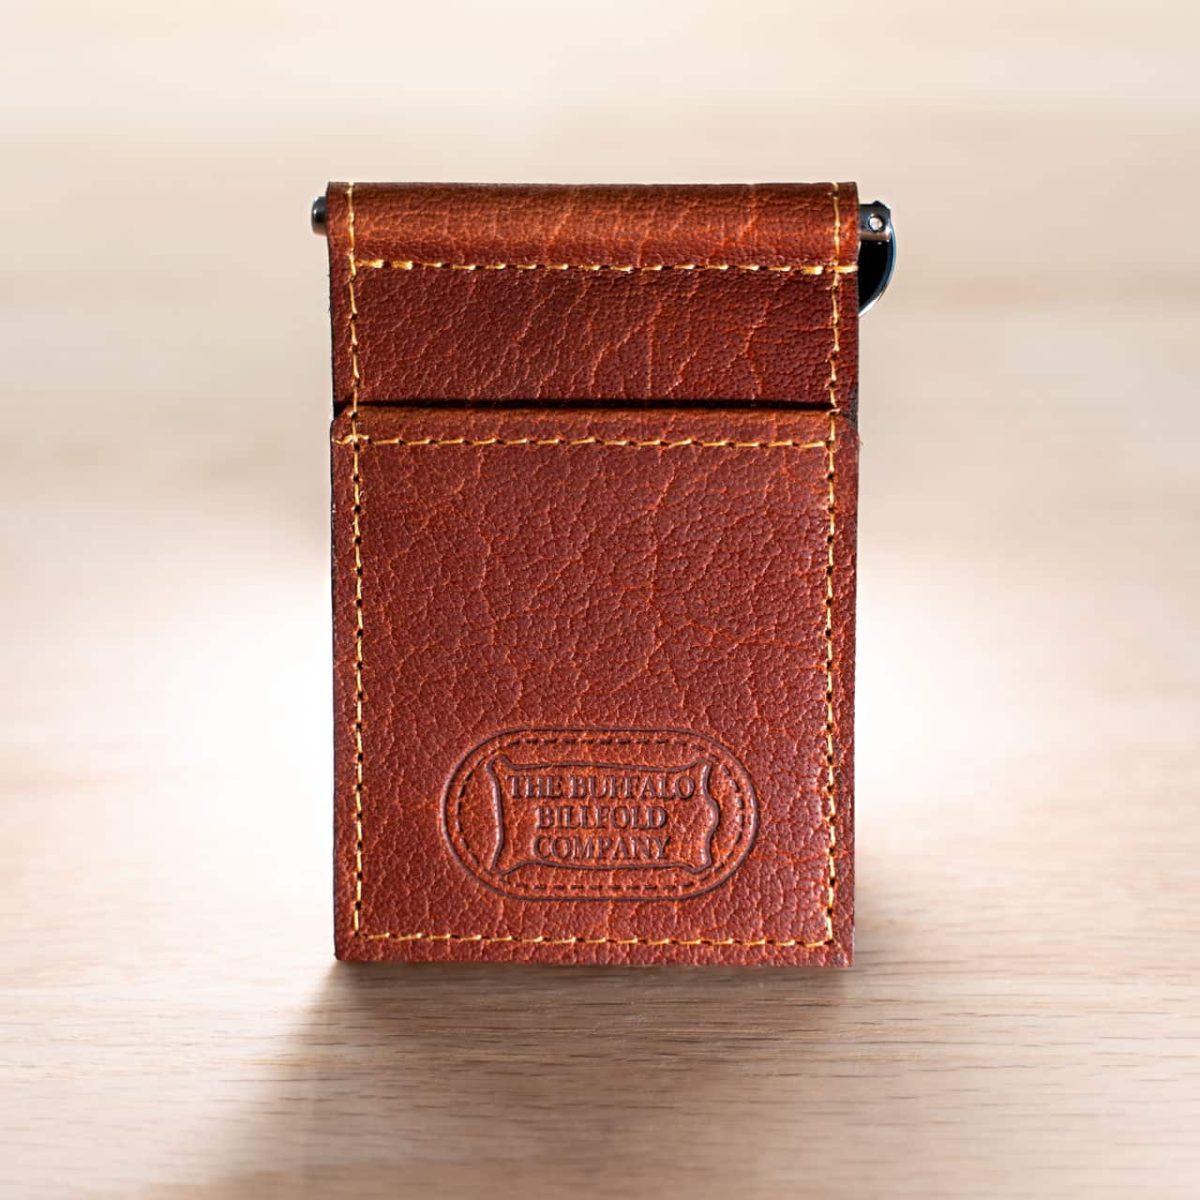 leather money clip wallet